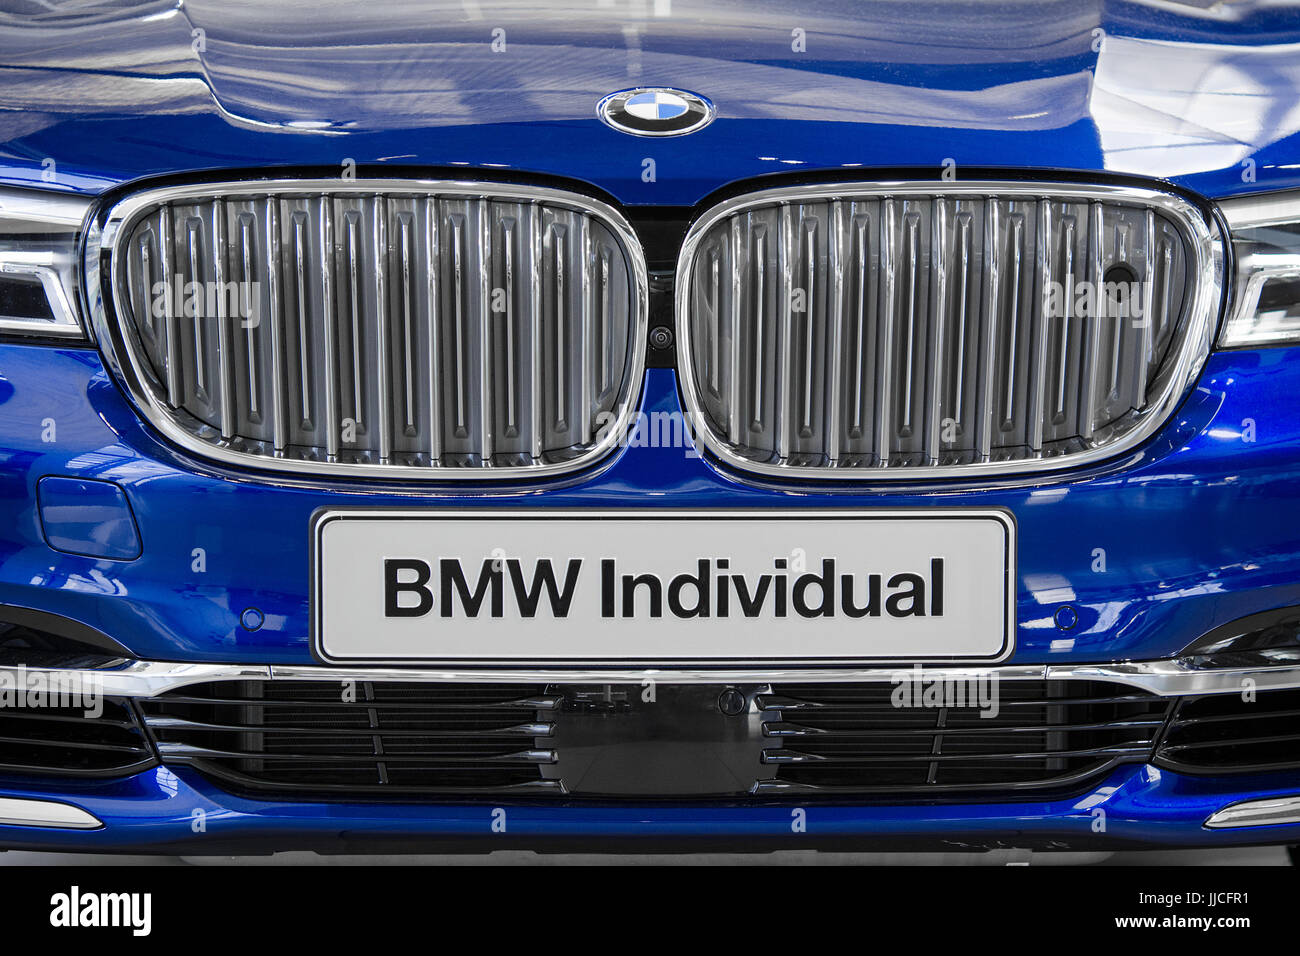 Munich, Germany - July 15, 2017: Close-up front view of new model BMW Individual stylish car Stock Photo